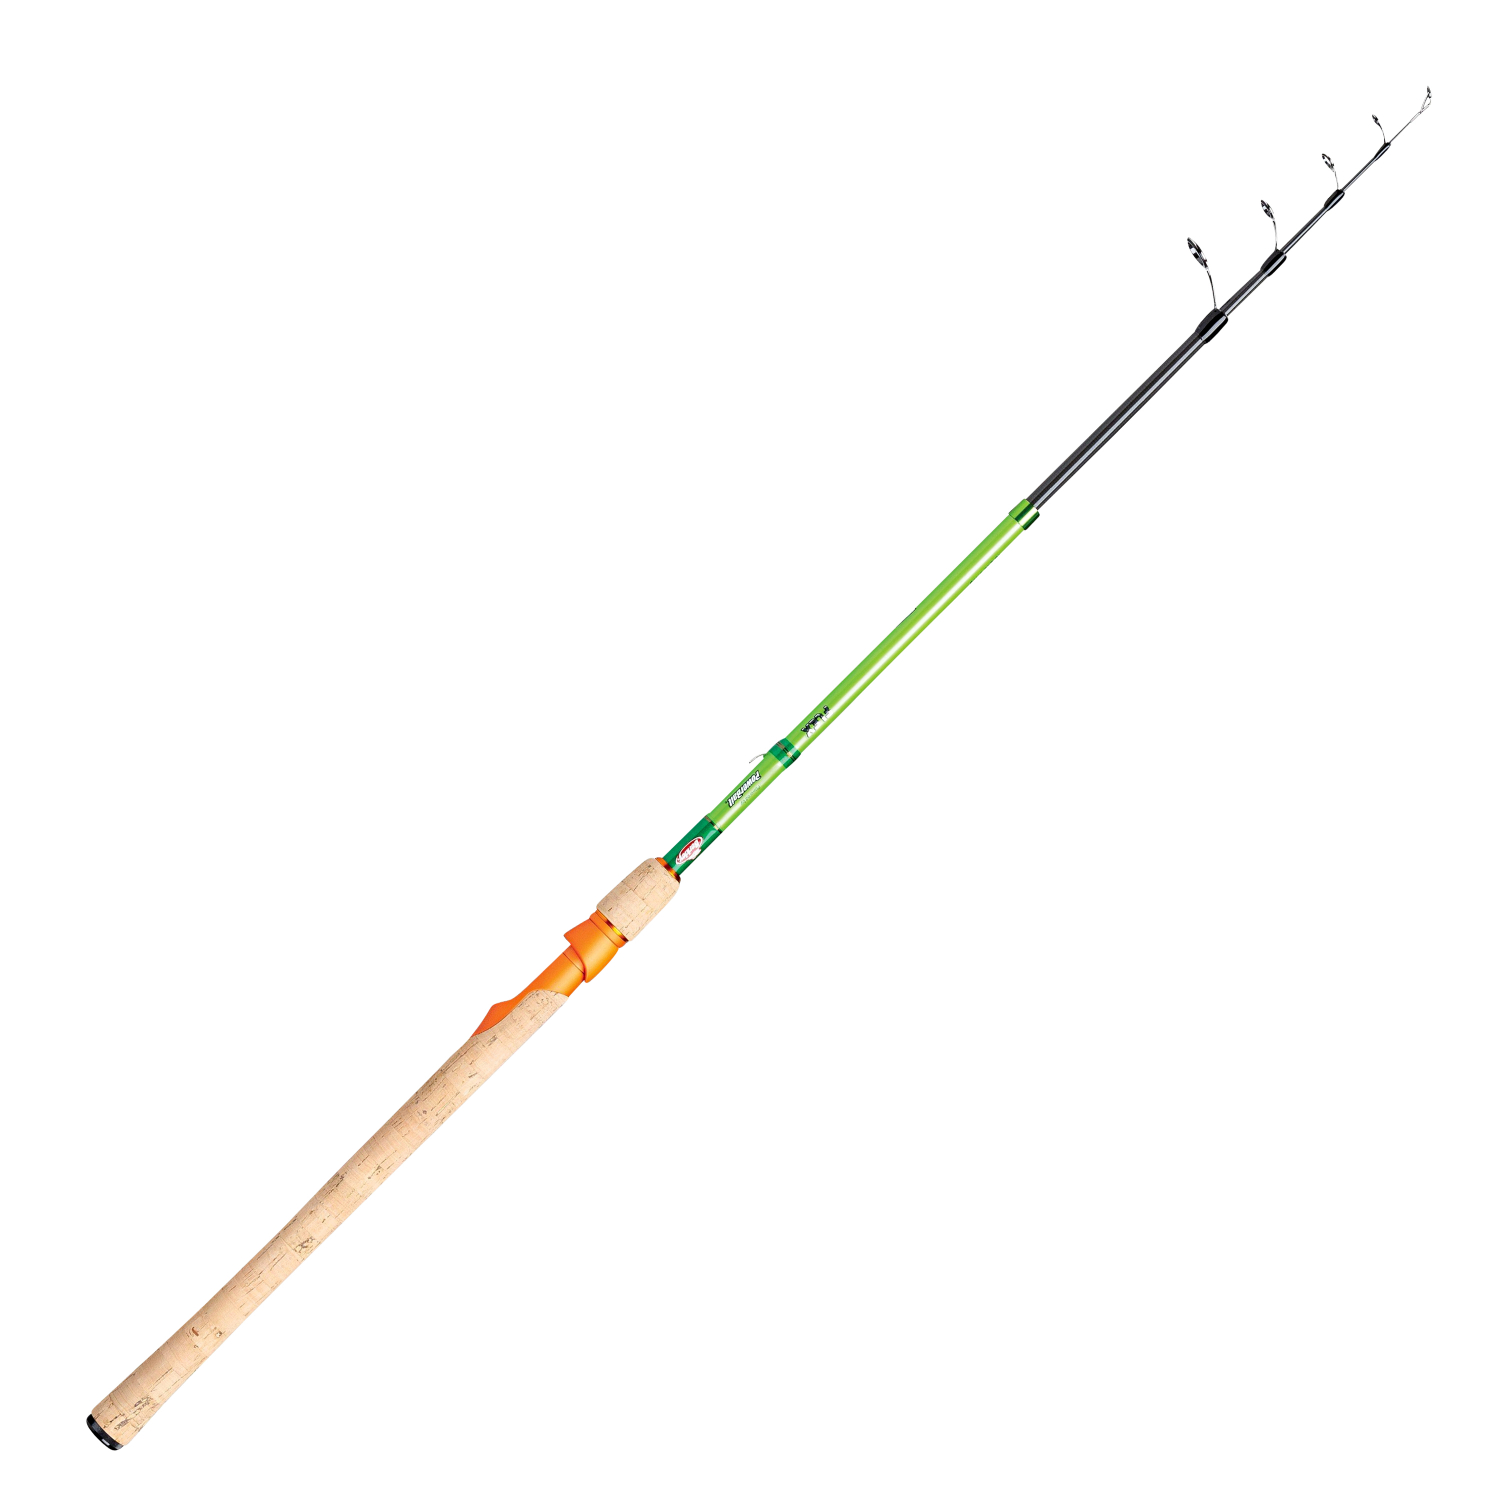 https://images.askari-sport.com/en/product/1/large/berkley-spinning-rod-flex-trout-rods-spinning-1669122306.jpg